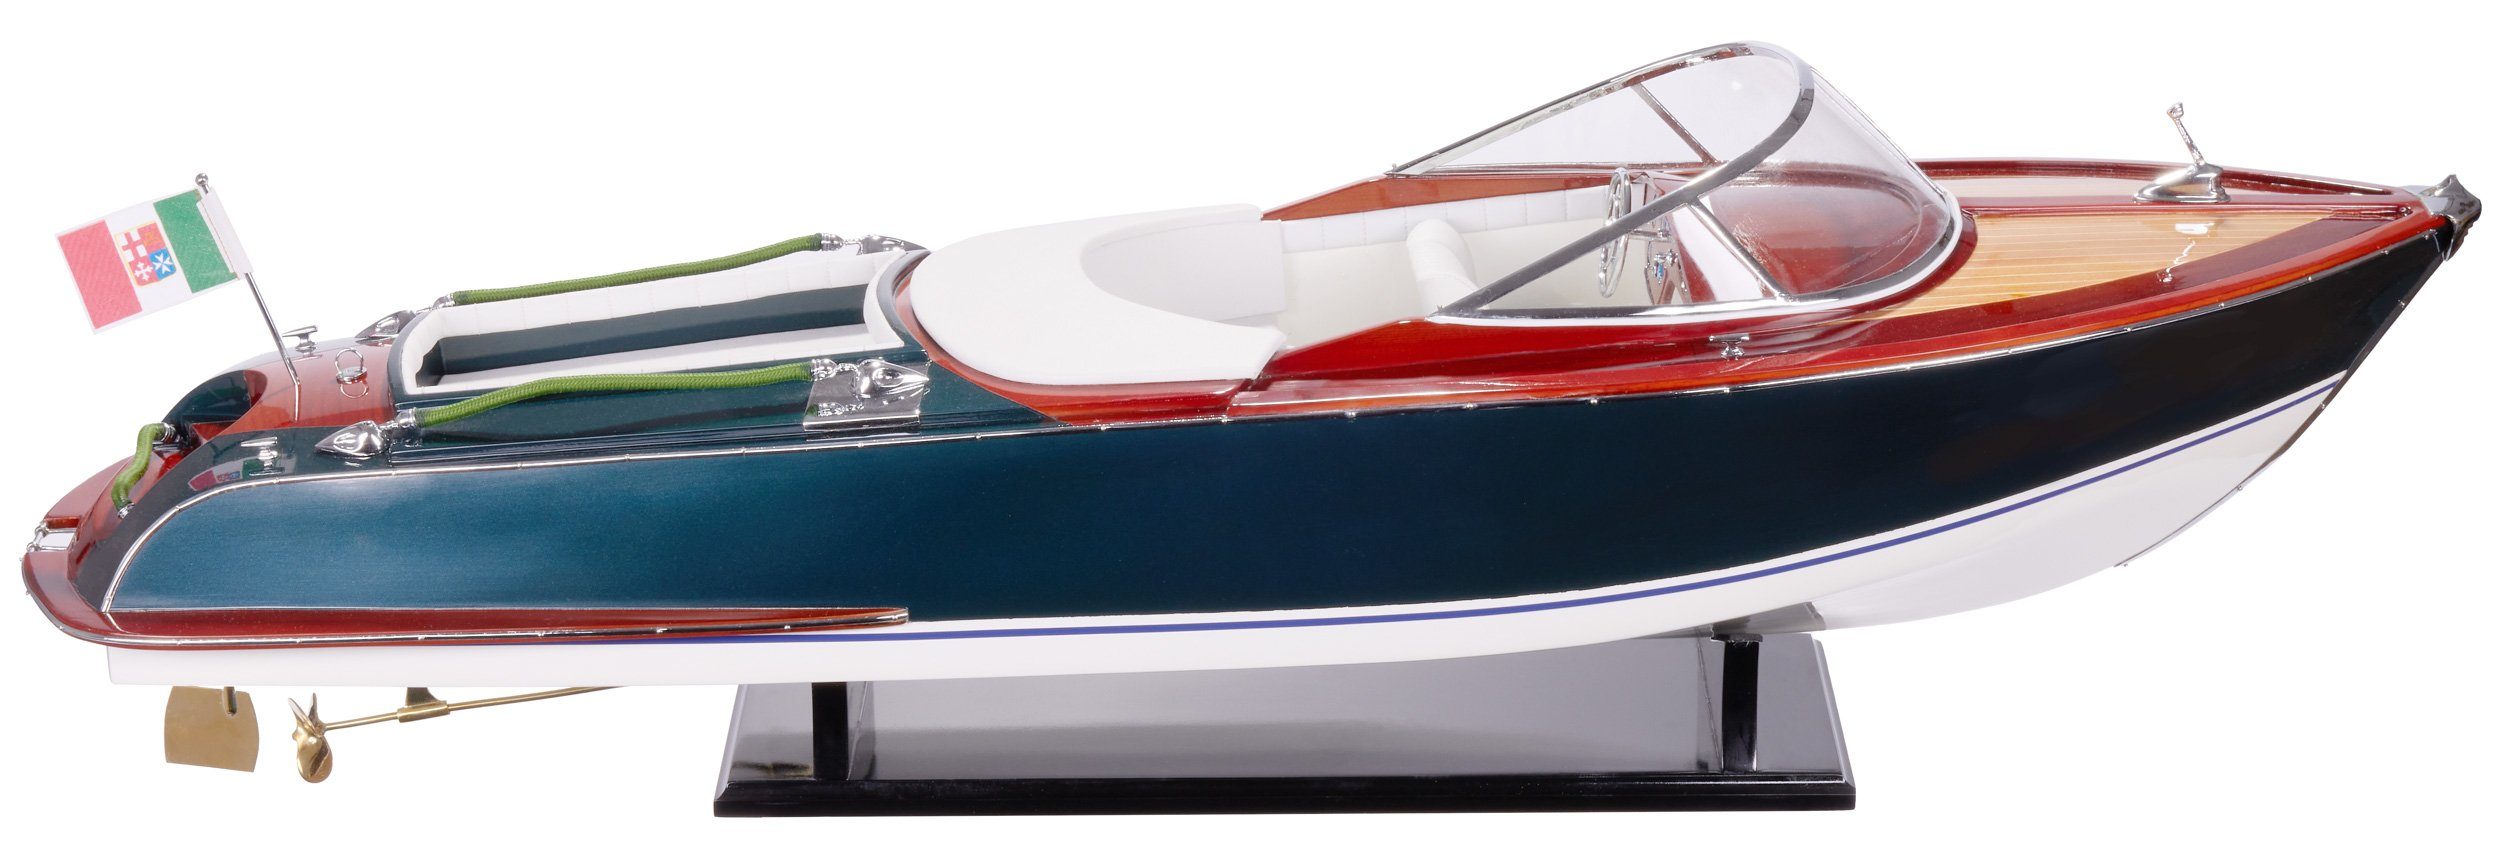 26 cm x 1:11, (1 Aquariva 88 im x 27 Luxus Italienisches Riva St), BRUBAKER Boot Dekoobjekt Handwerksarbeit Maßstab mit Dekoration Luxusboot, Zertifikat, Modellboot Replika